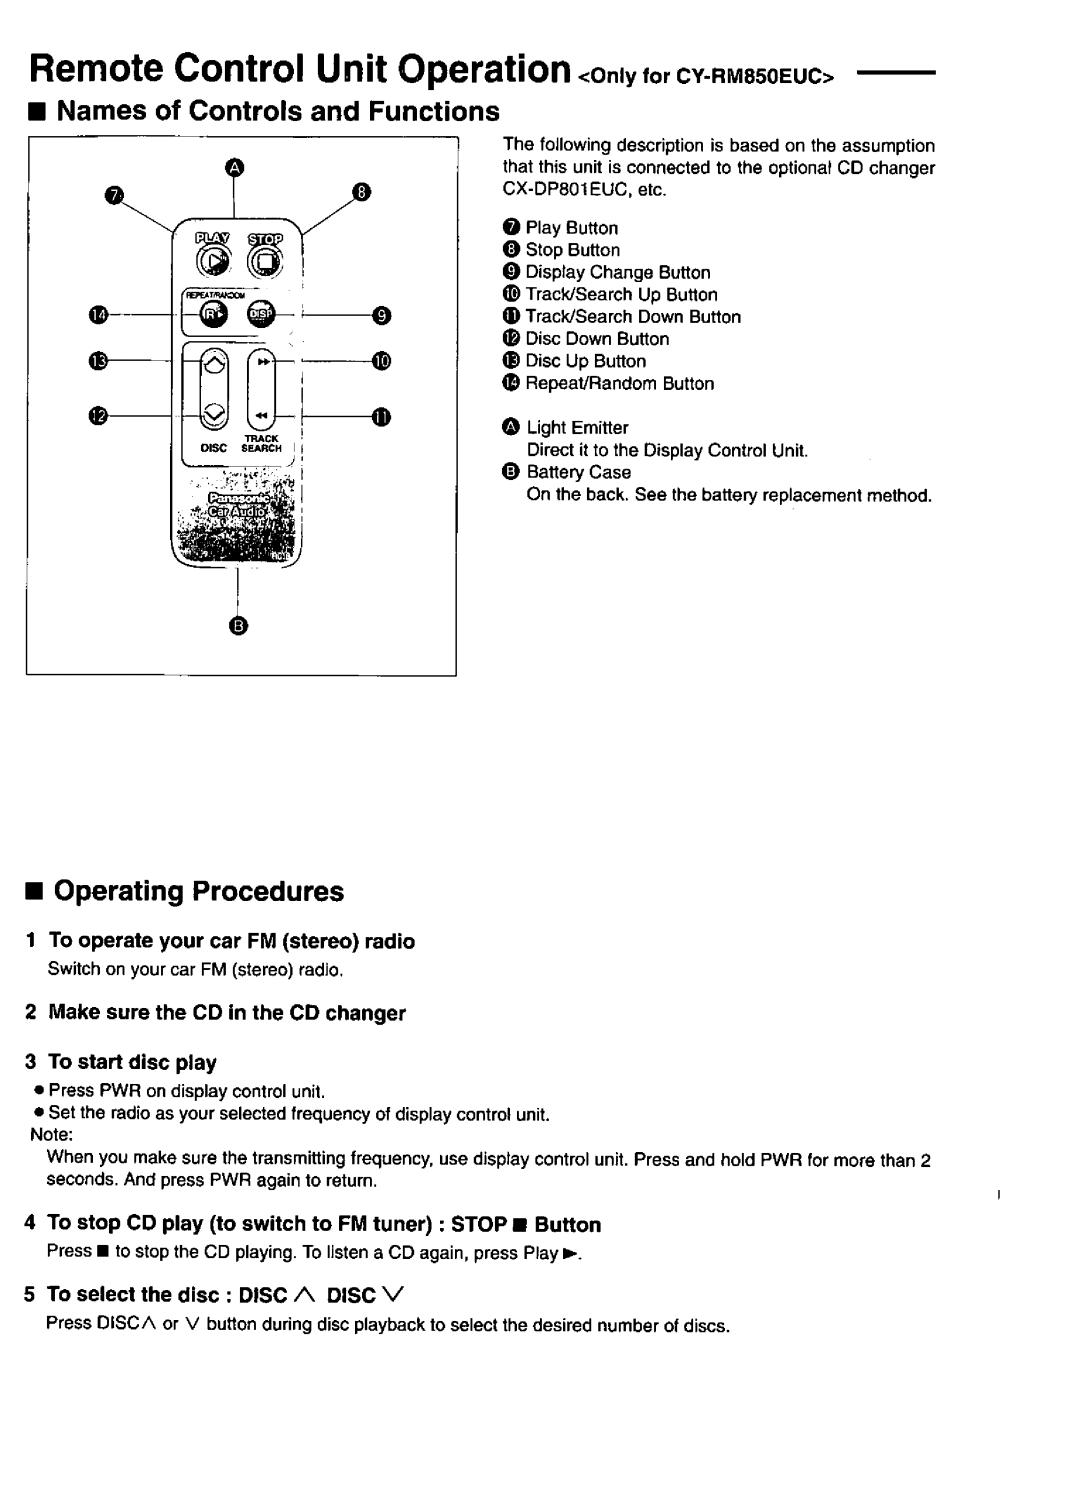 Panasonic 800EUC, CY-RM850 manual 